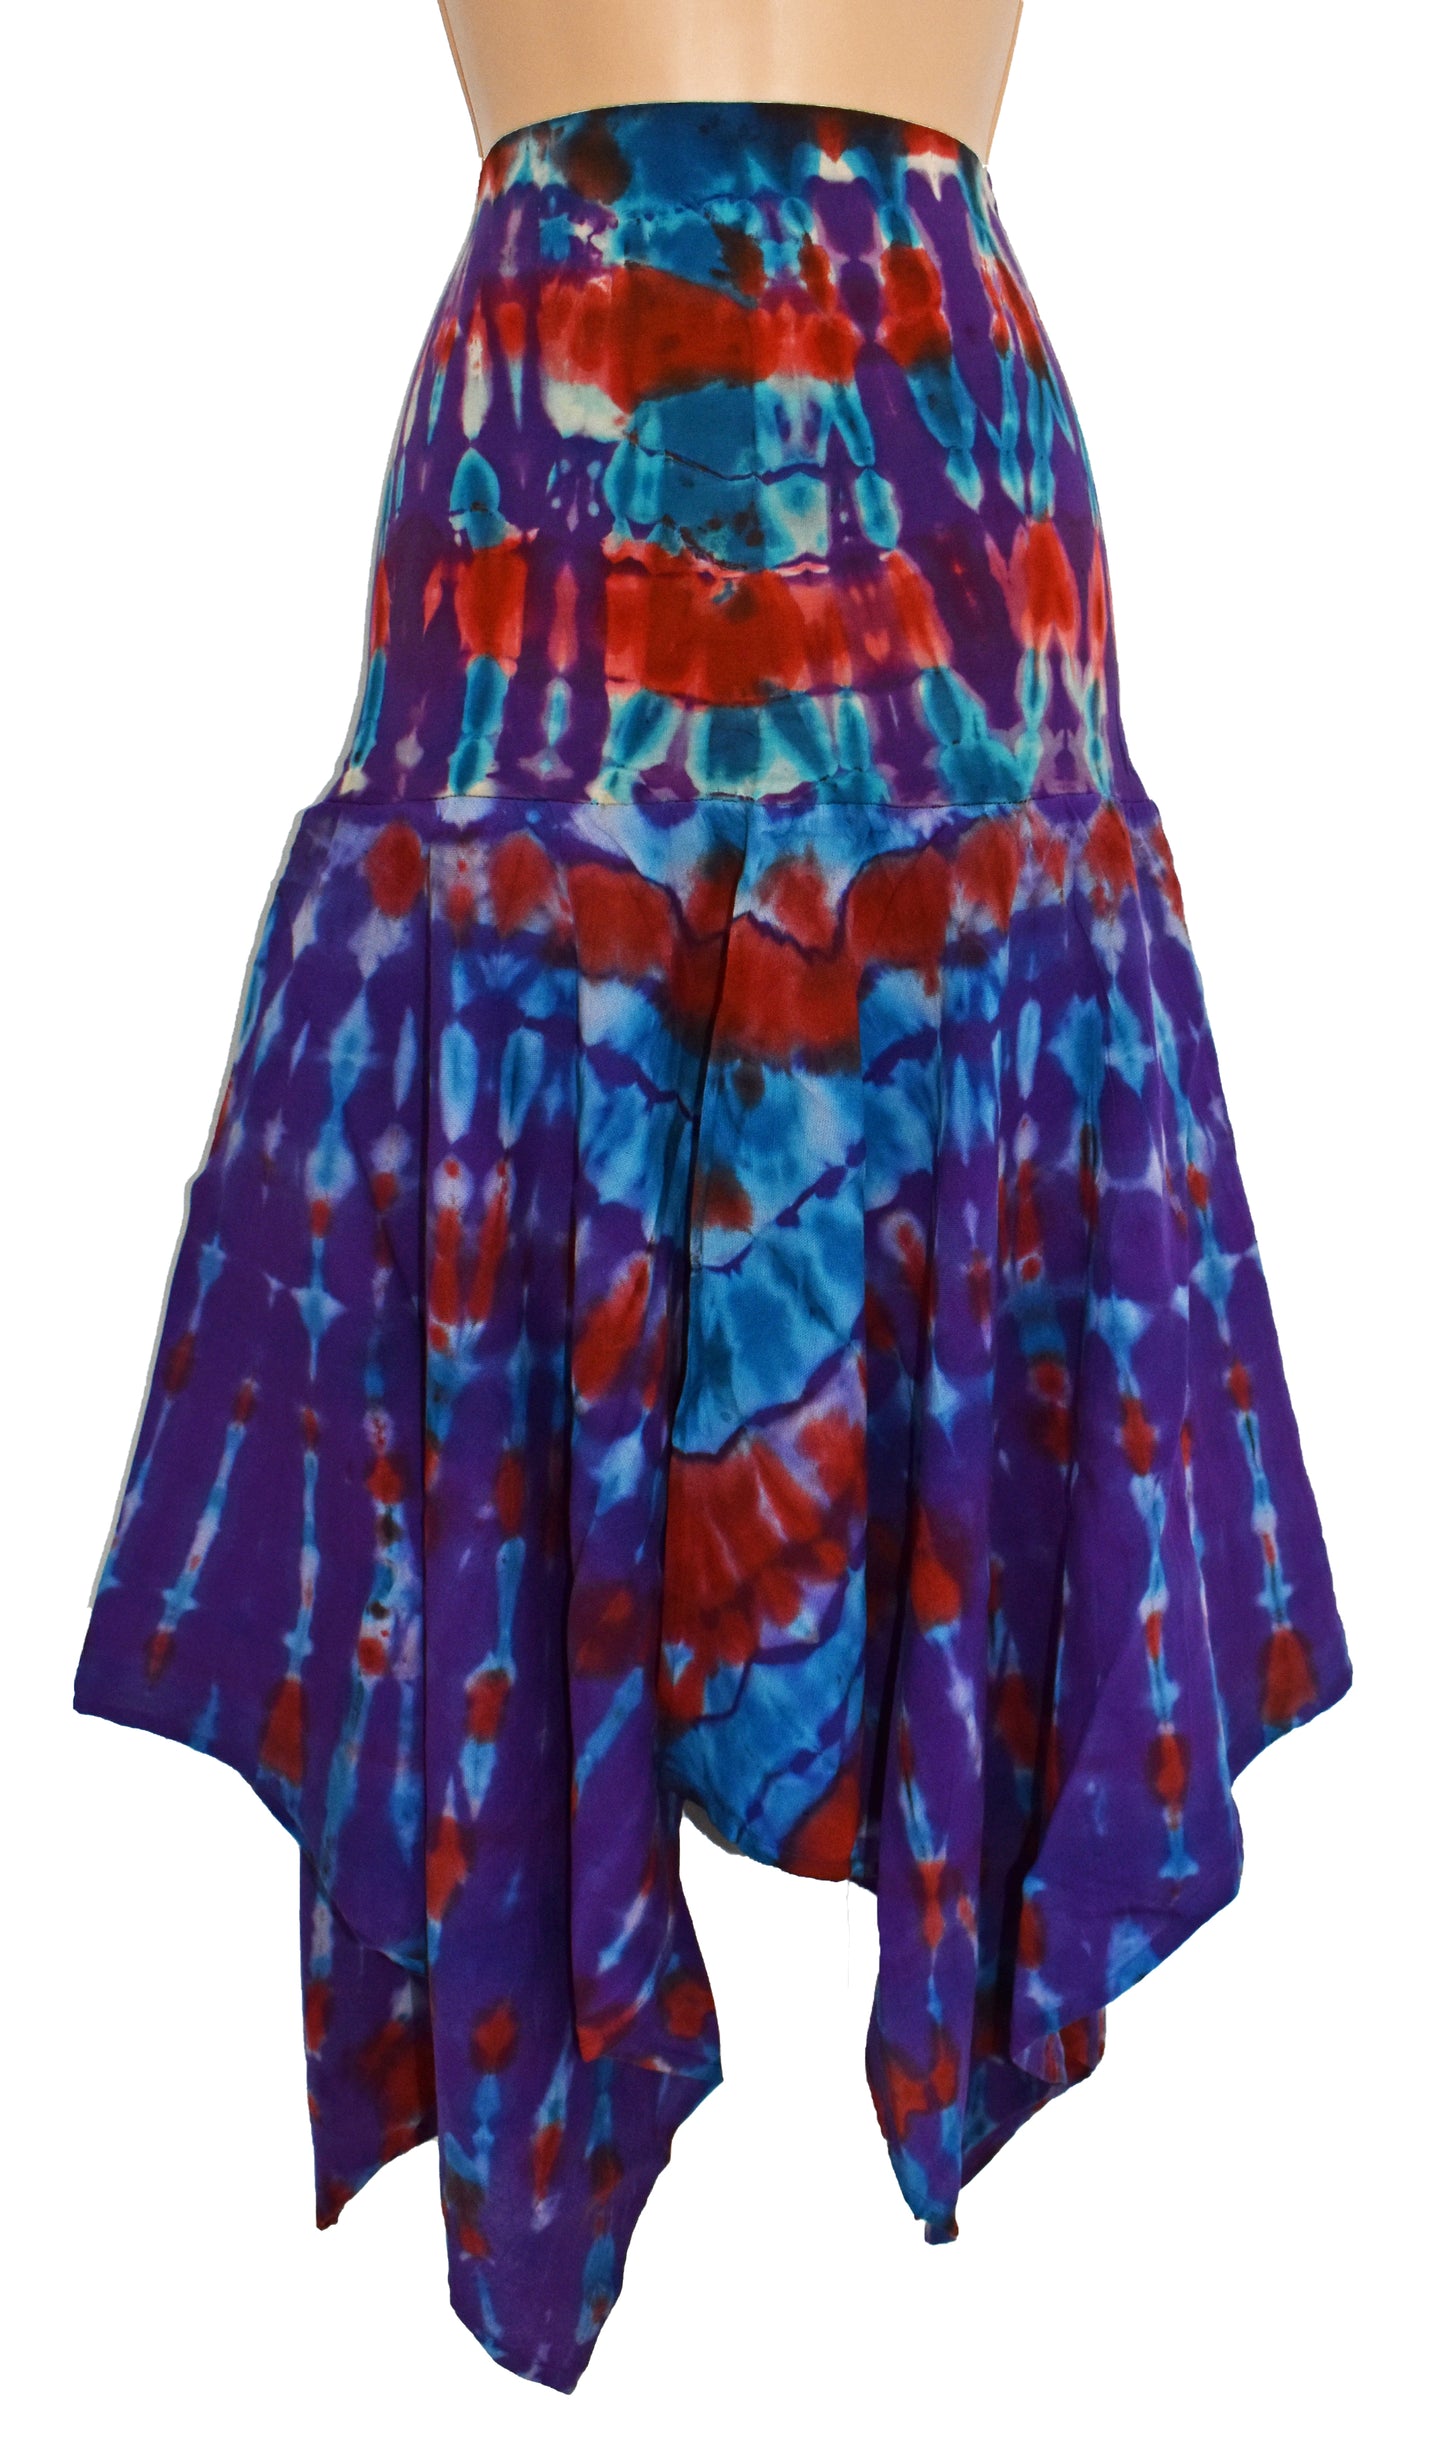 Tie Dye Pixie Hem Skirt Dress Small 8 - 12